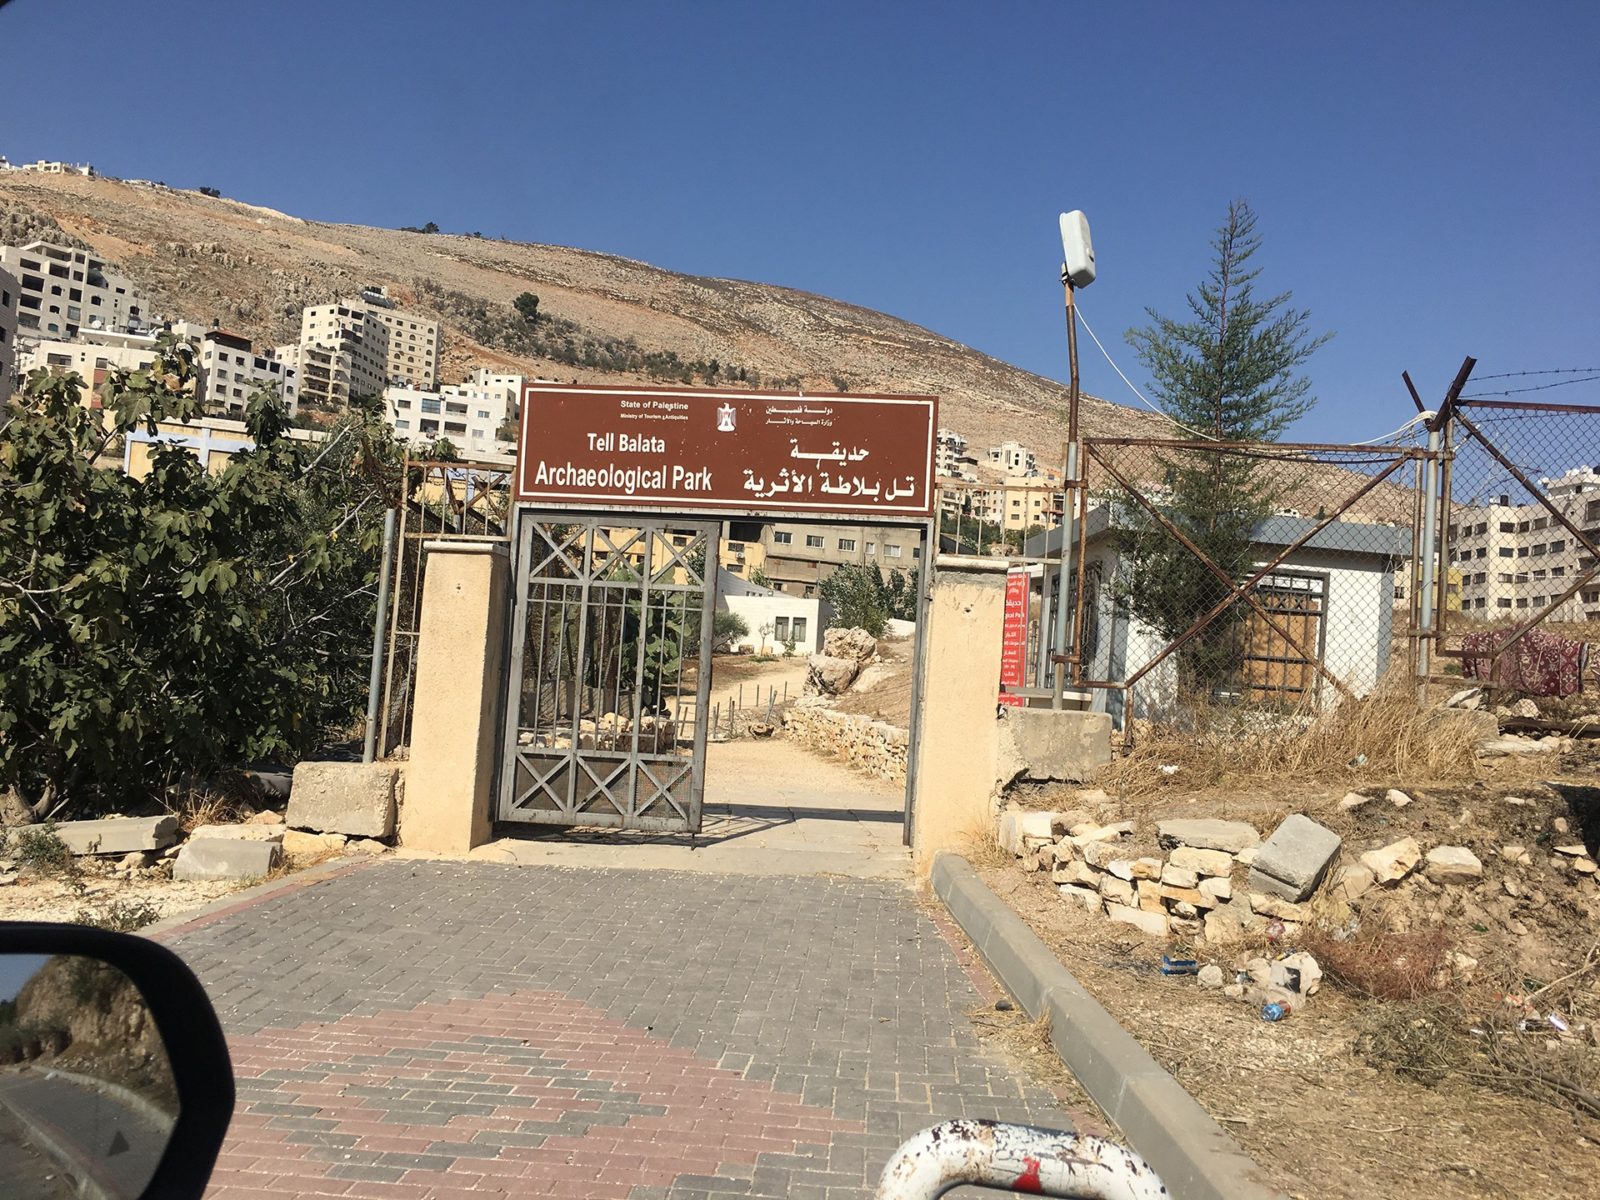 Entrance to Tel Balata Archaeological Park, Nablus